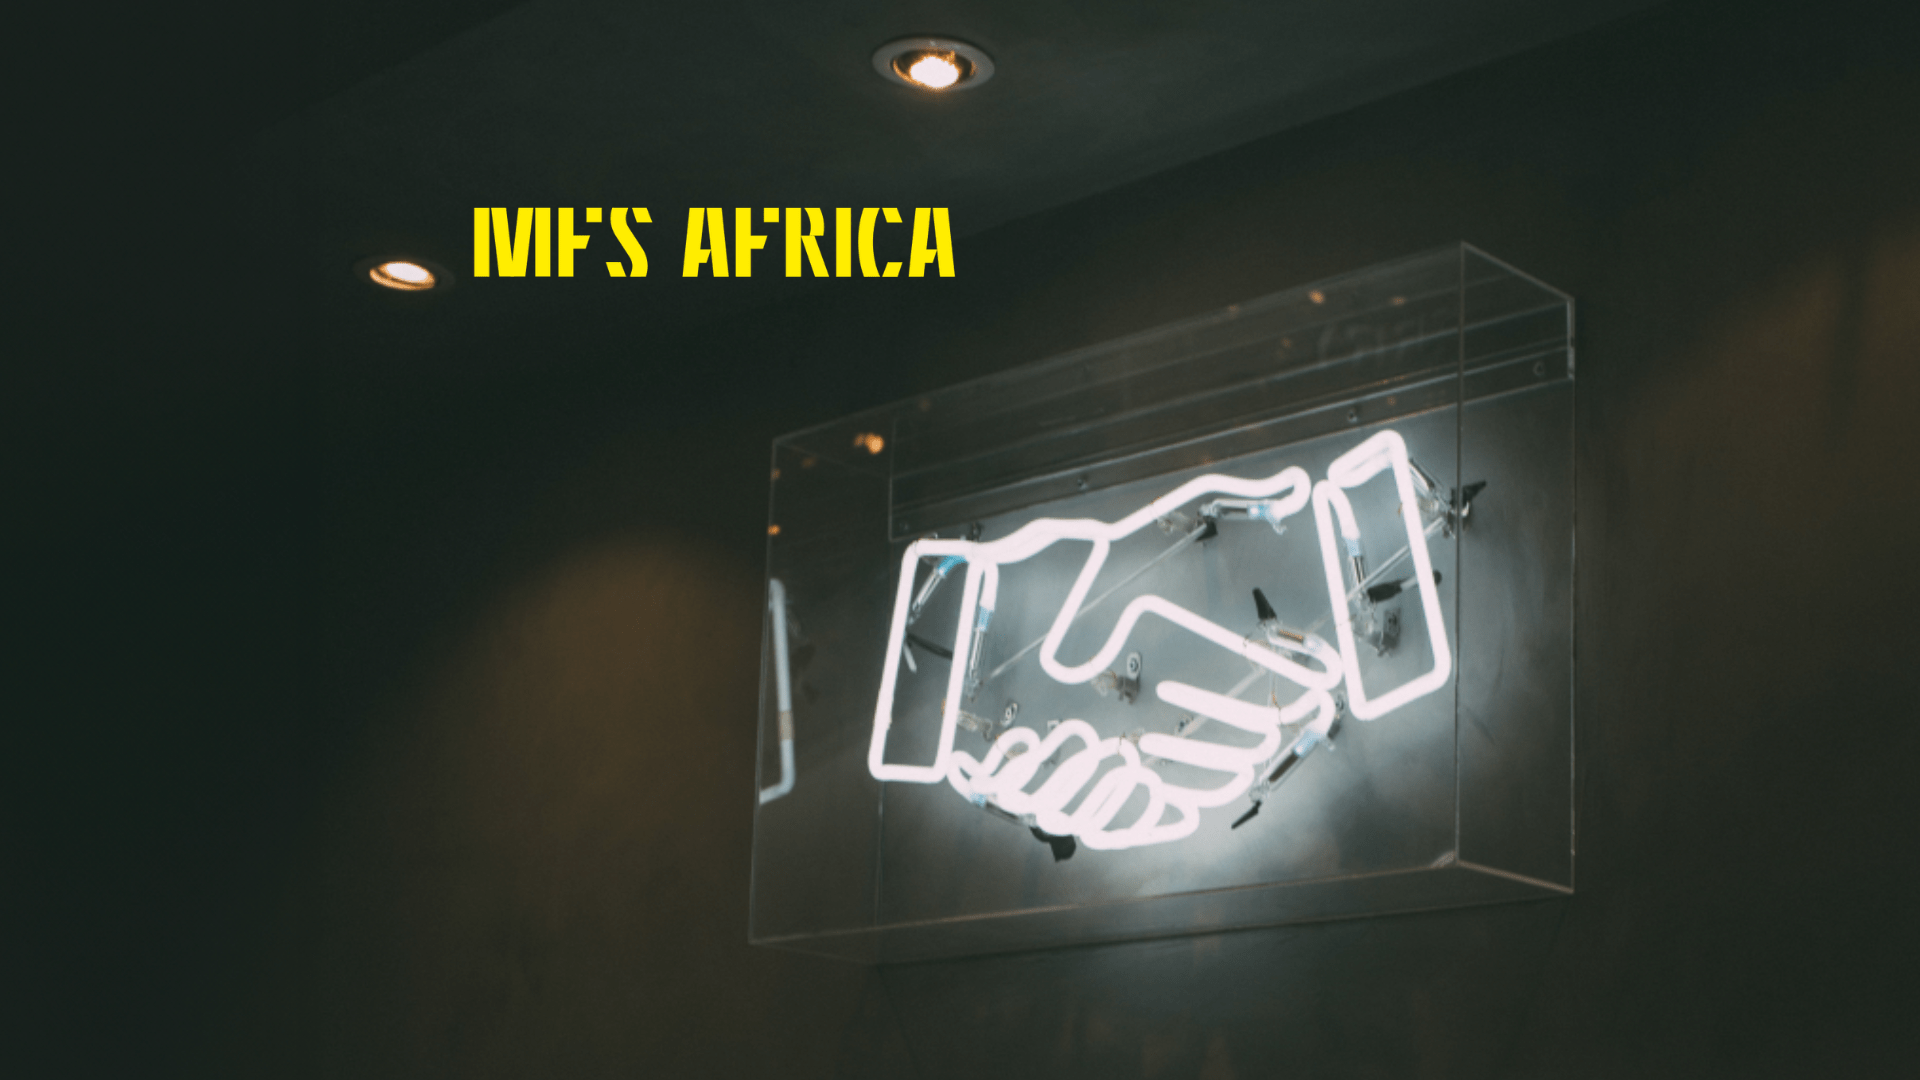 Delivering Sales leads for MFS Africa